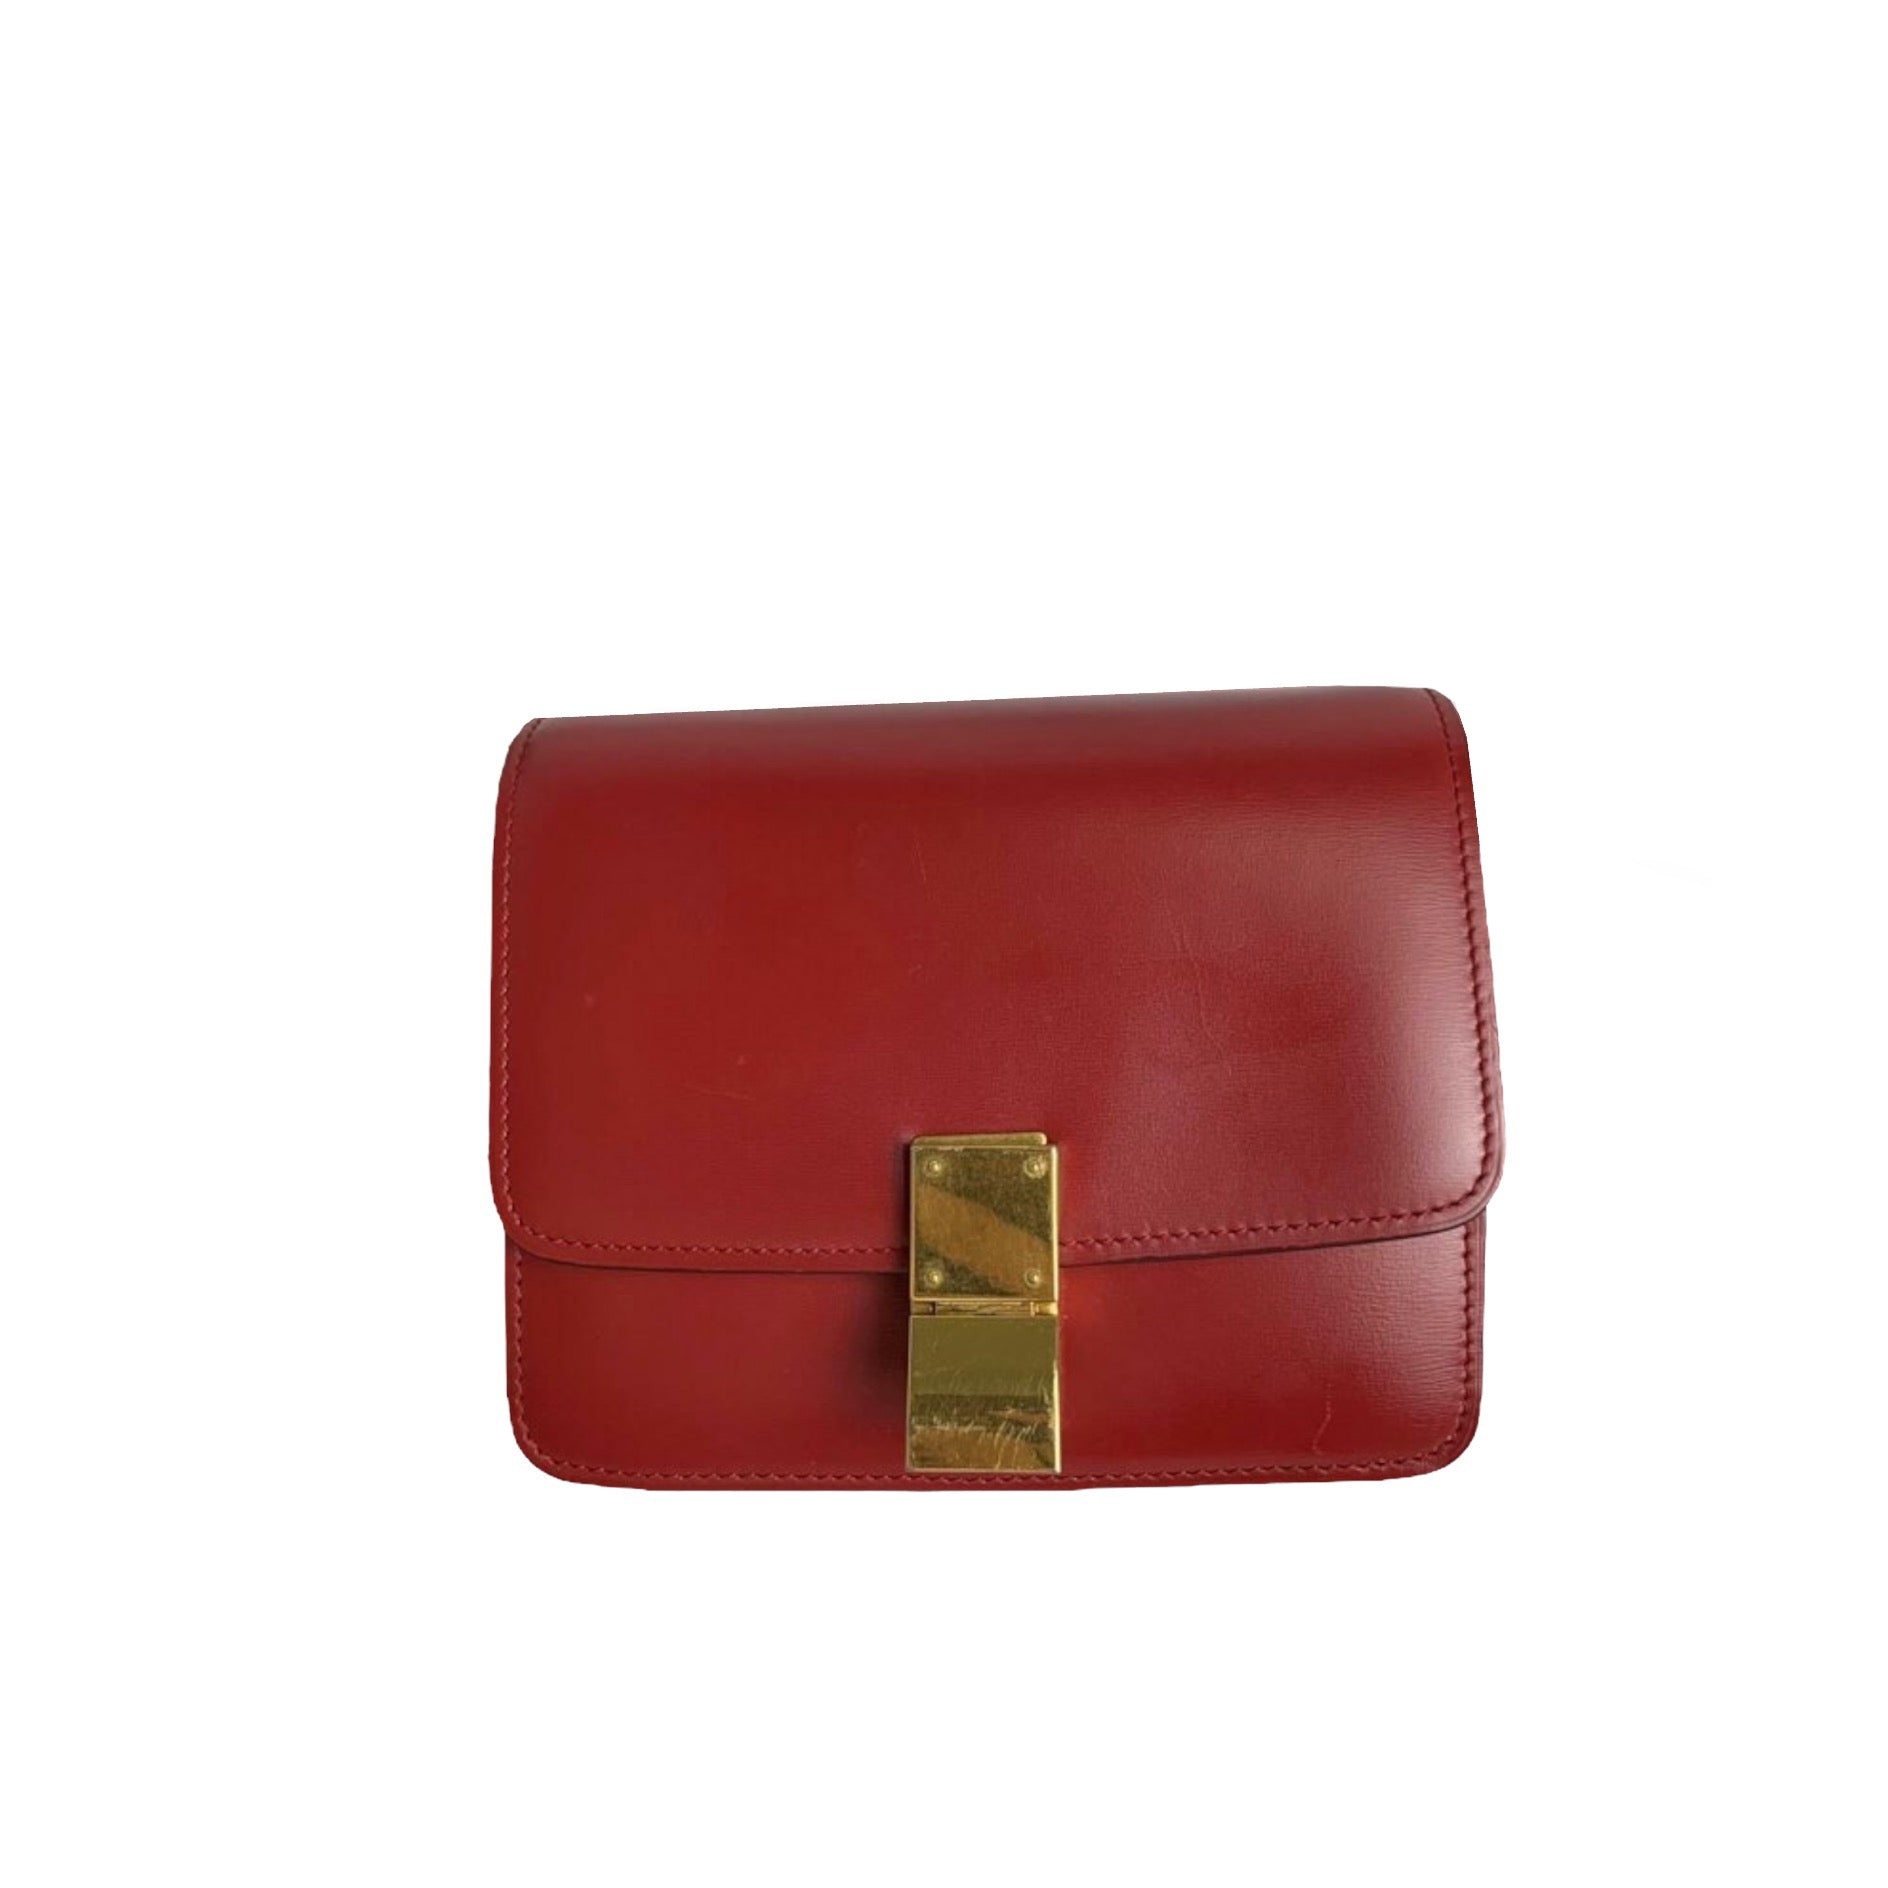 Celine Classic Box Bag Smooth Leather Medium Red 22441016